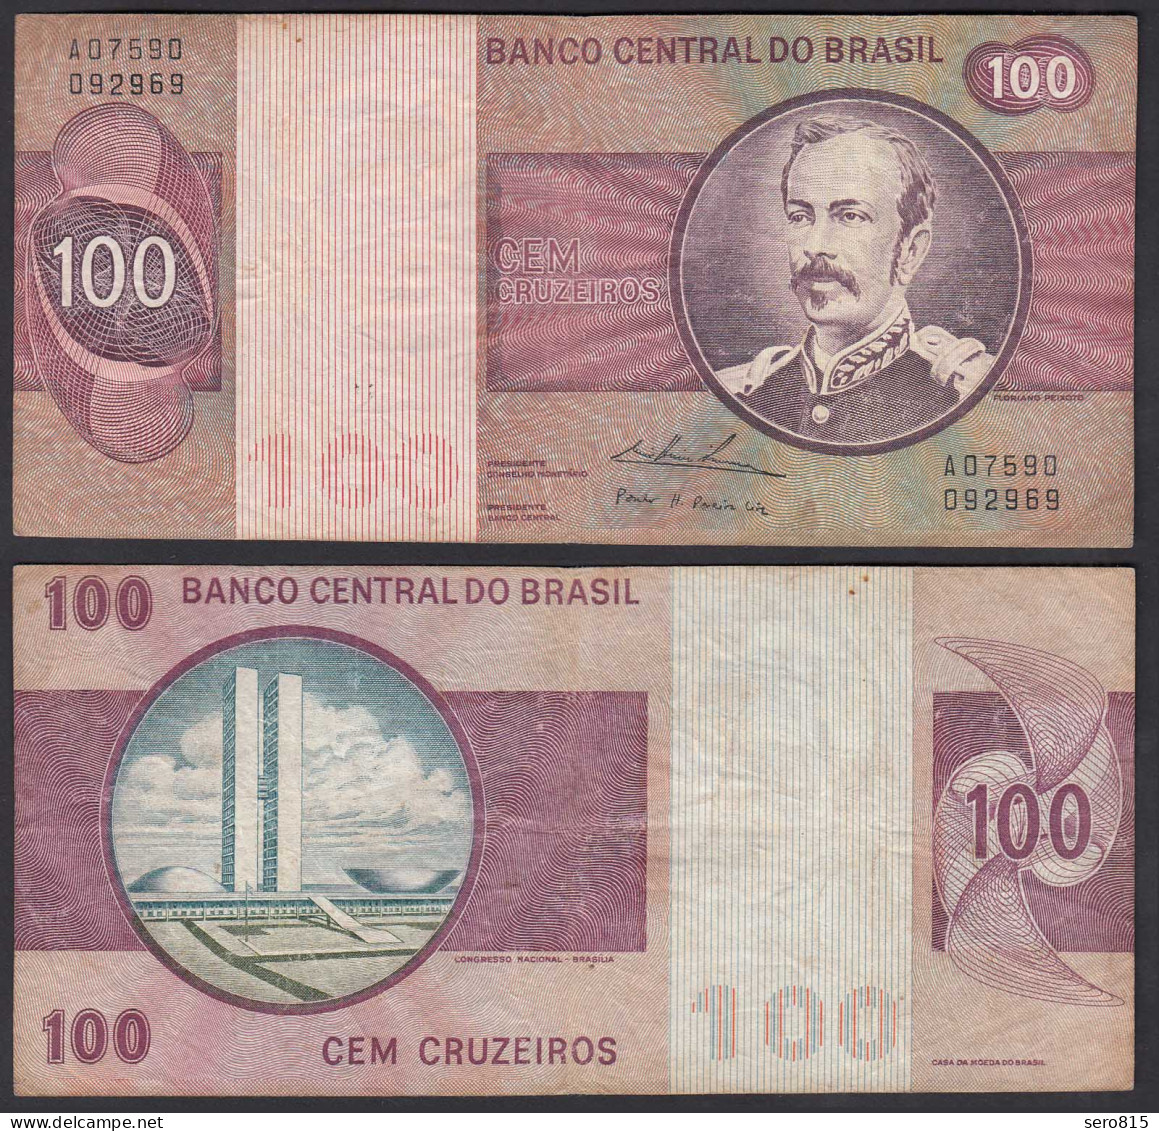 Brasilien - Brazil 100 Cruzados Banknote (1974) Pick 195 Aa F+ (4+) Sig.18 - Altri – America